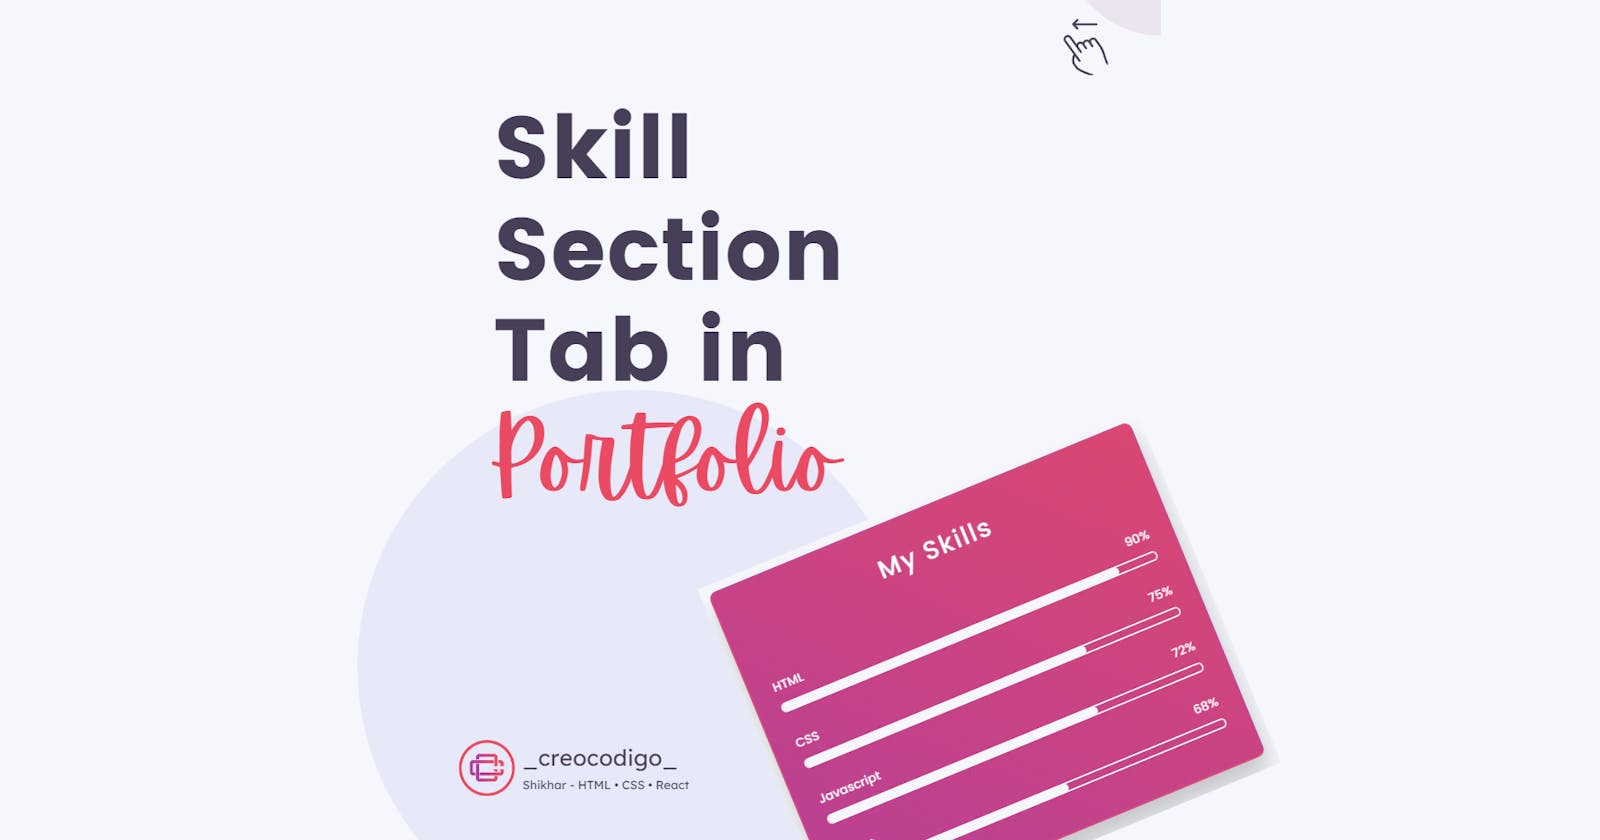 Skills Section in Portfolio